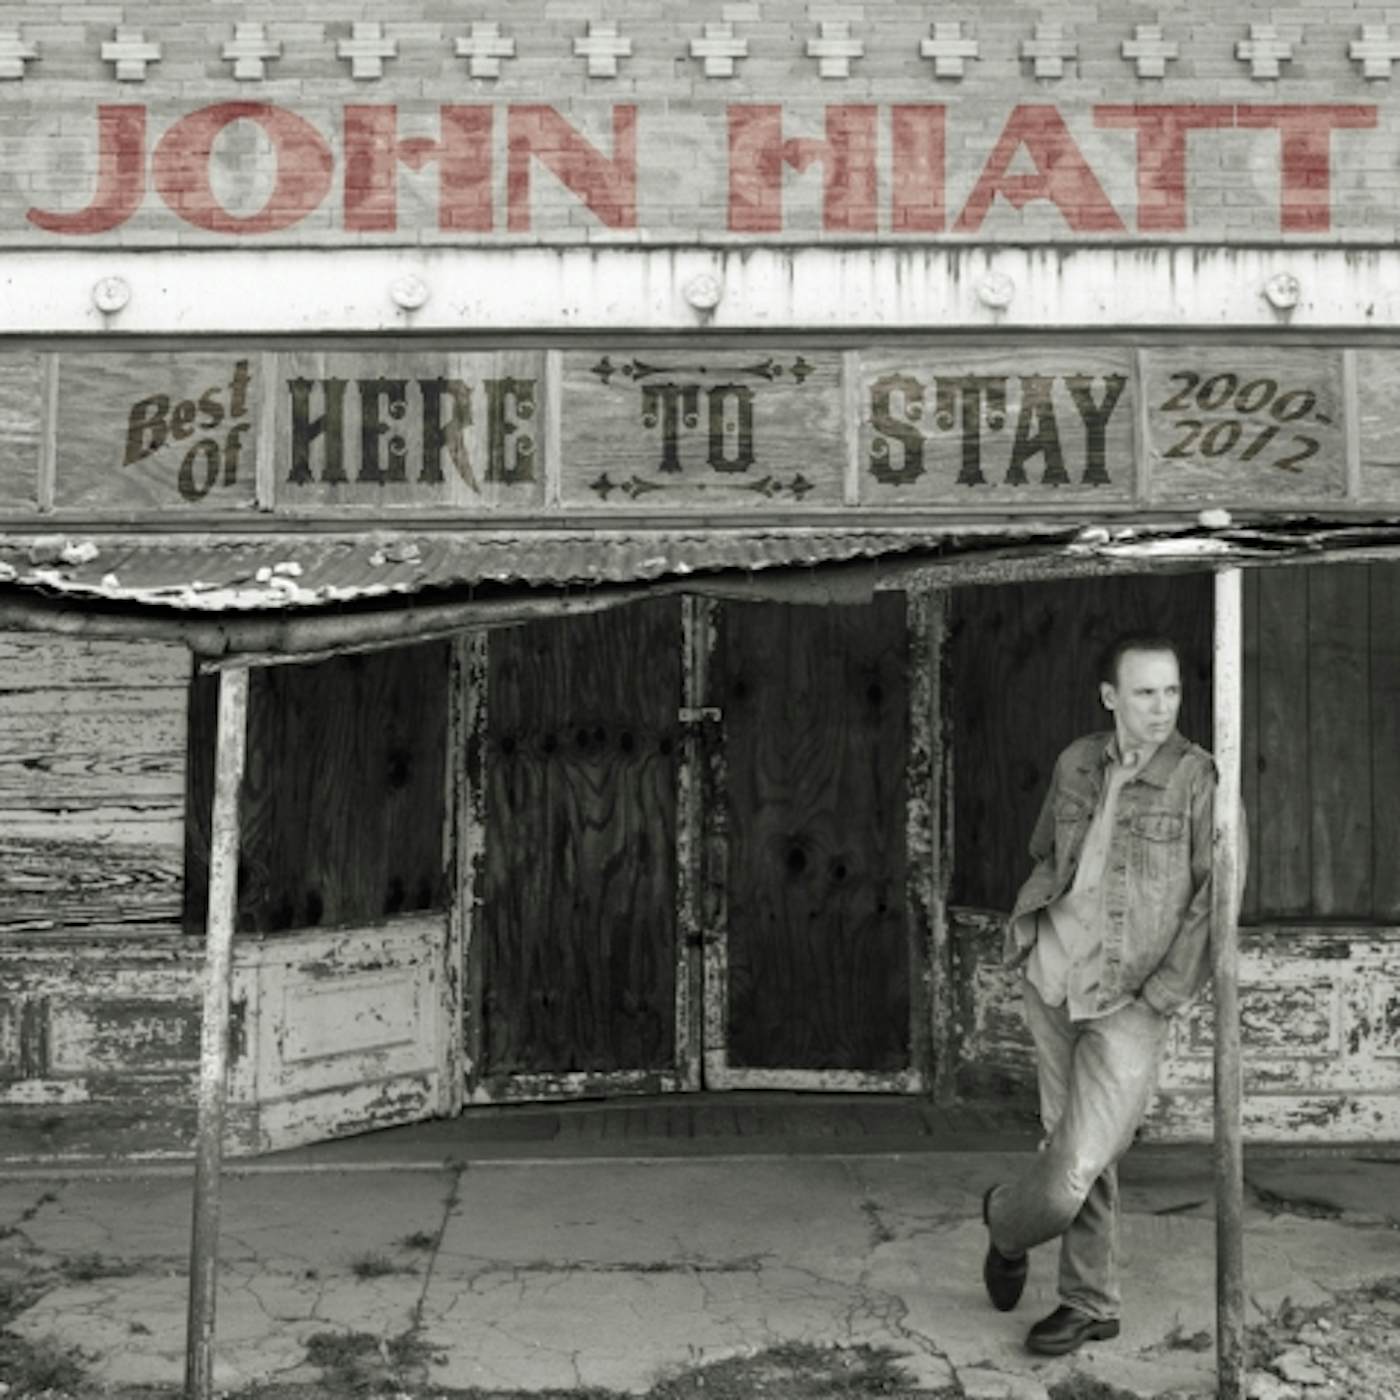 John Hiatt HERE TO STAY - BEST OF 2000-2012 CD